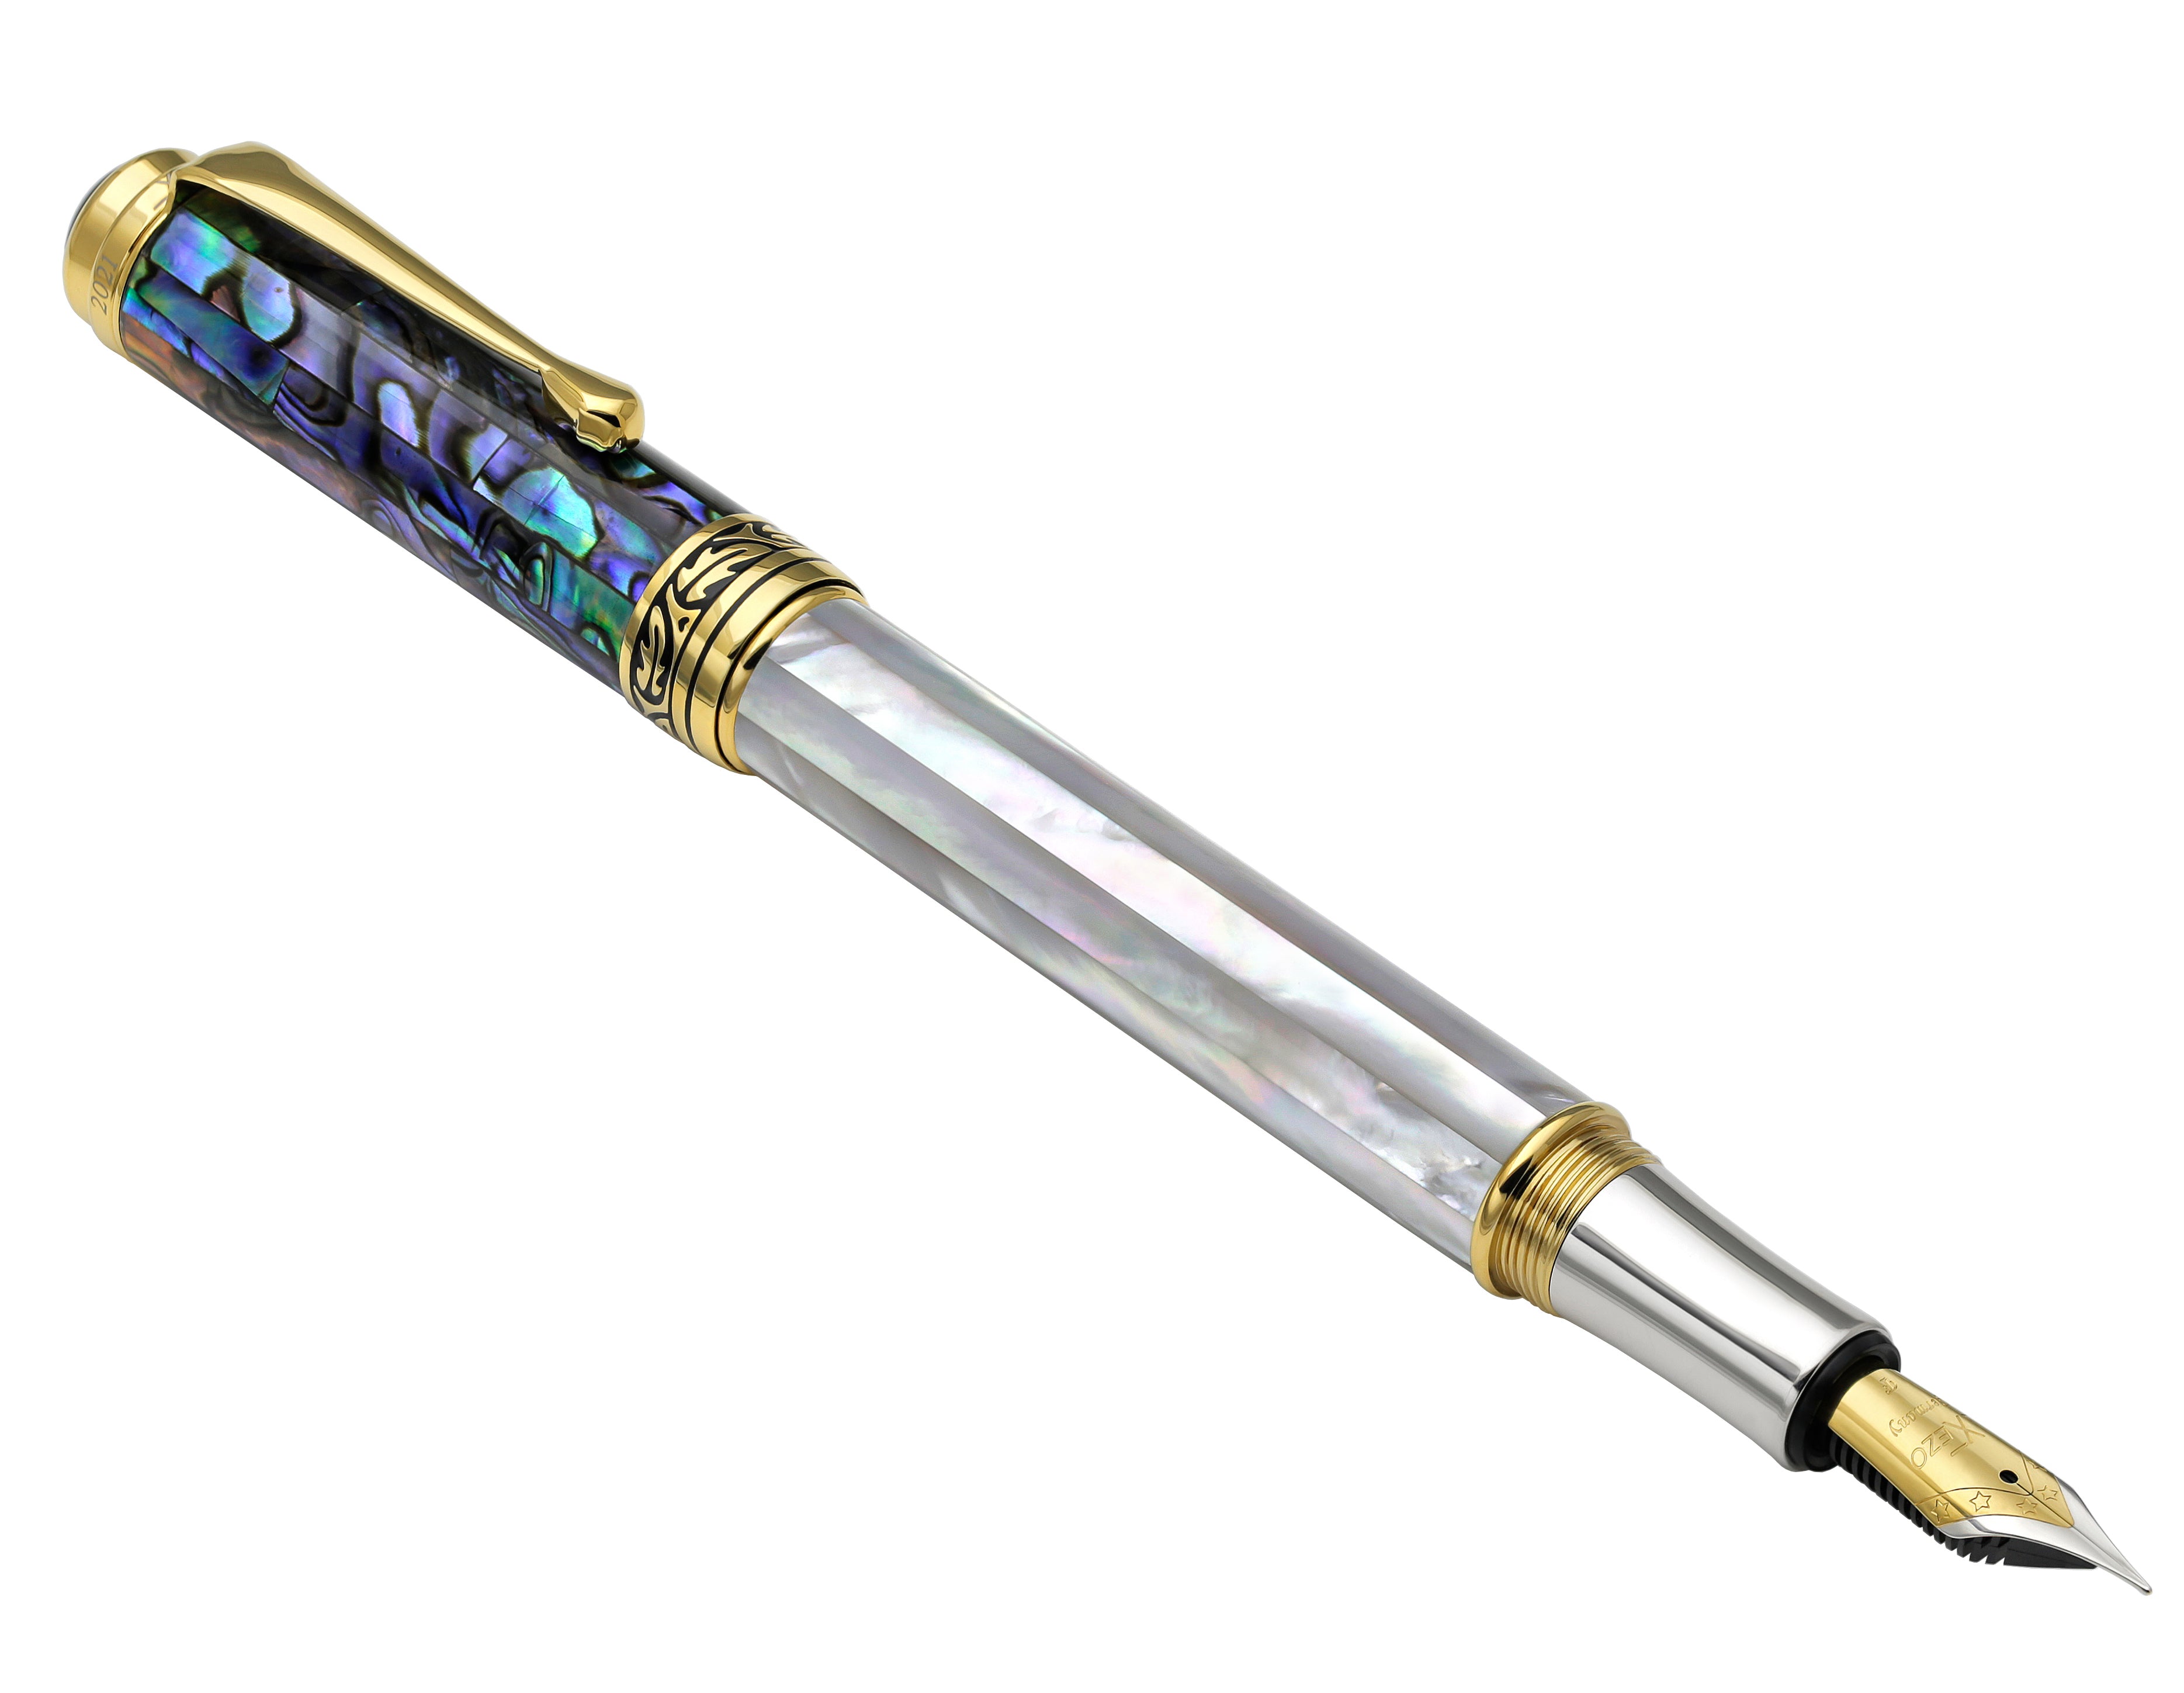 Xezo Maestro オーシャニックオリジン 虹色ホワイトマザーオブパール シリアルナンバー入り中字ペン。18金、プラチナメッキ。同じペンは2つと - 5